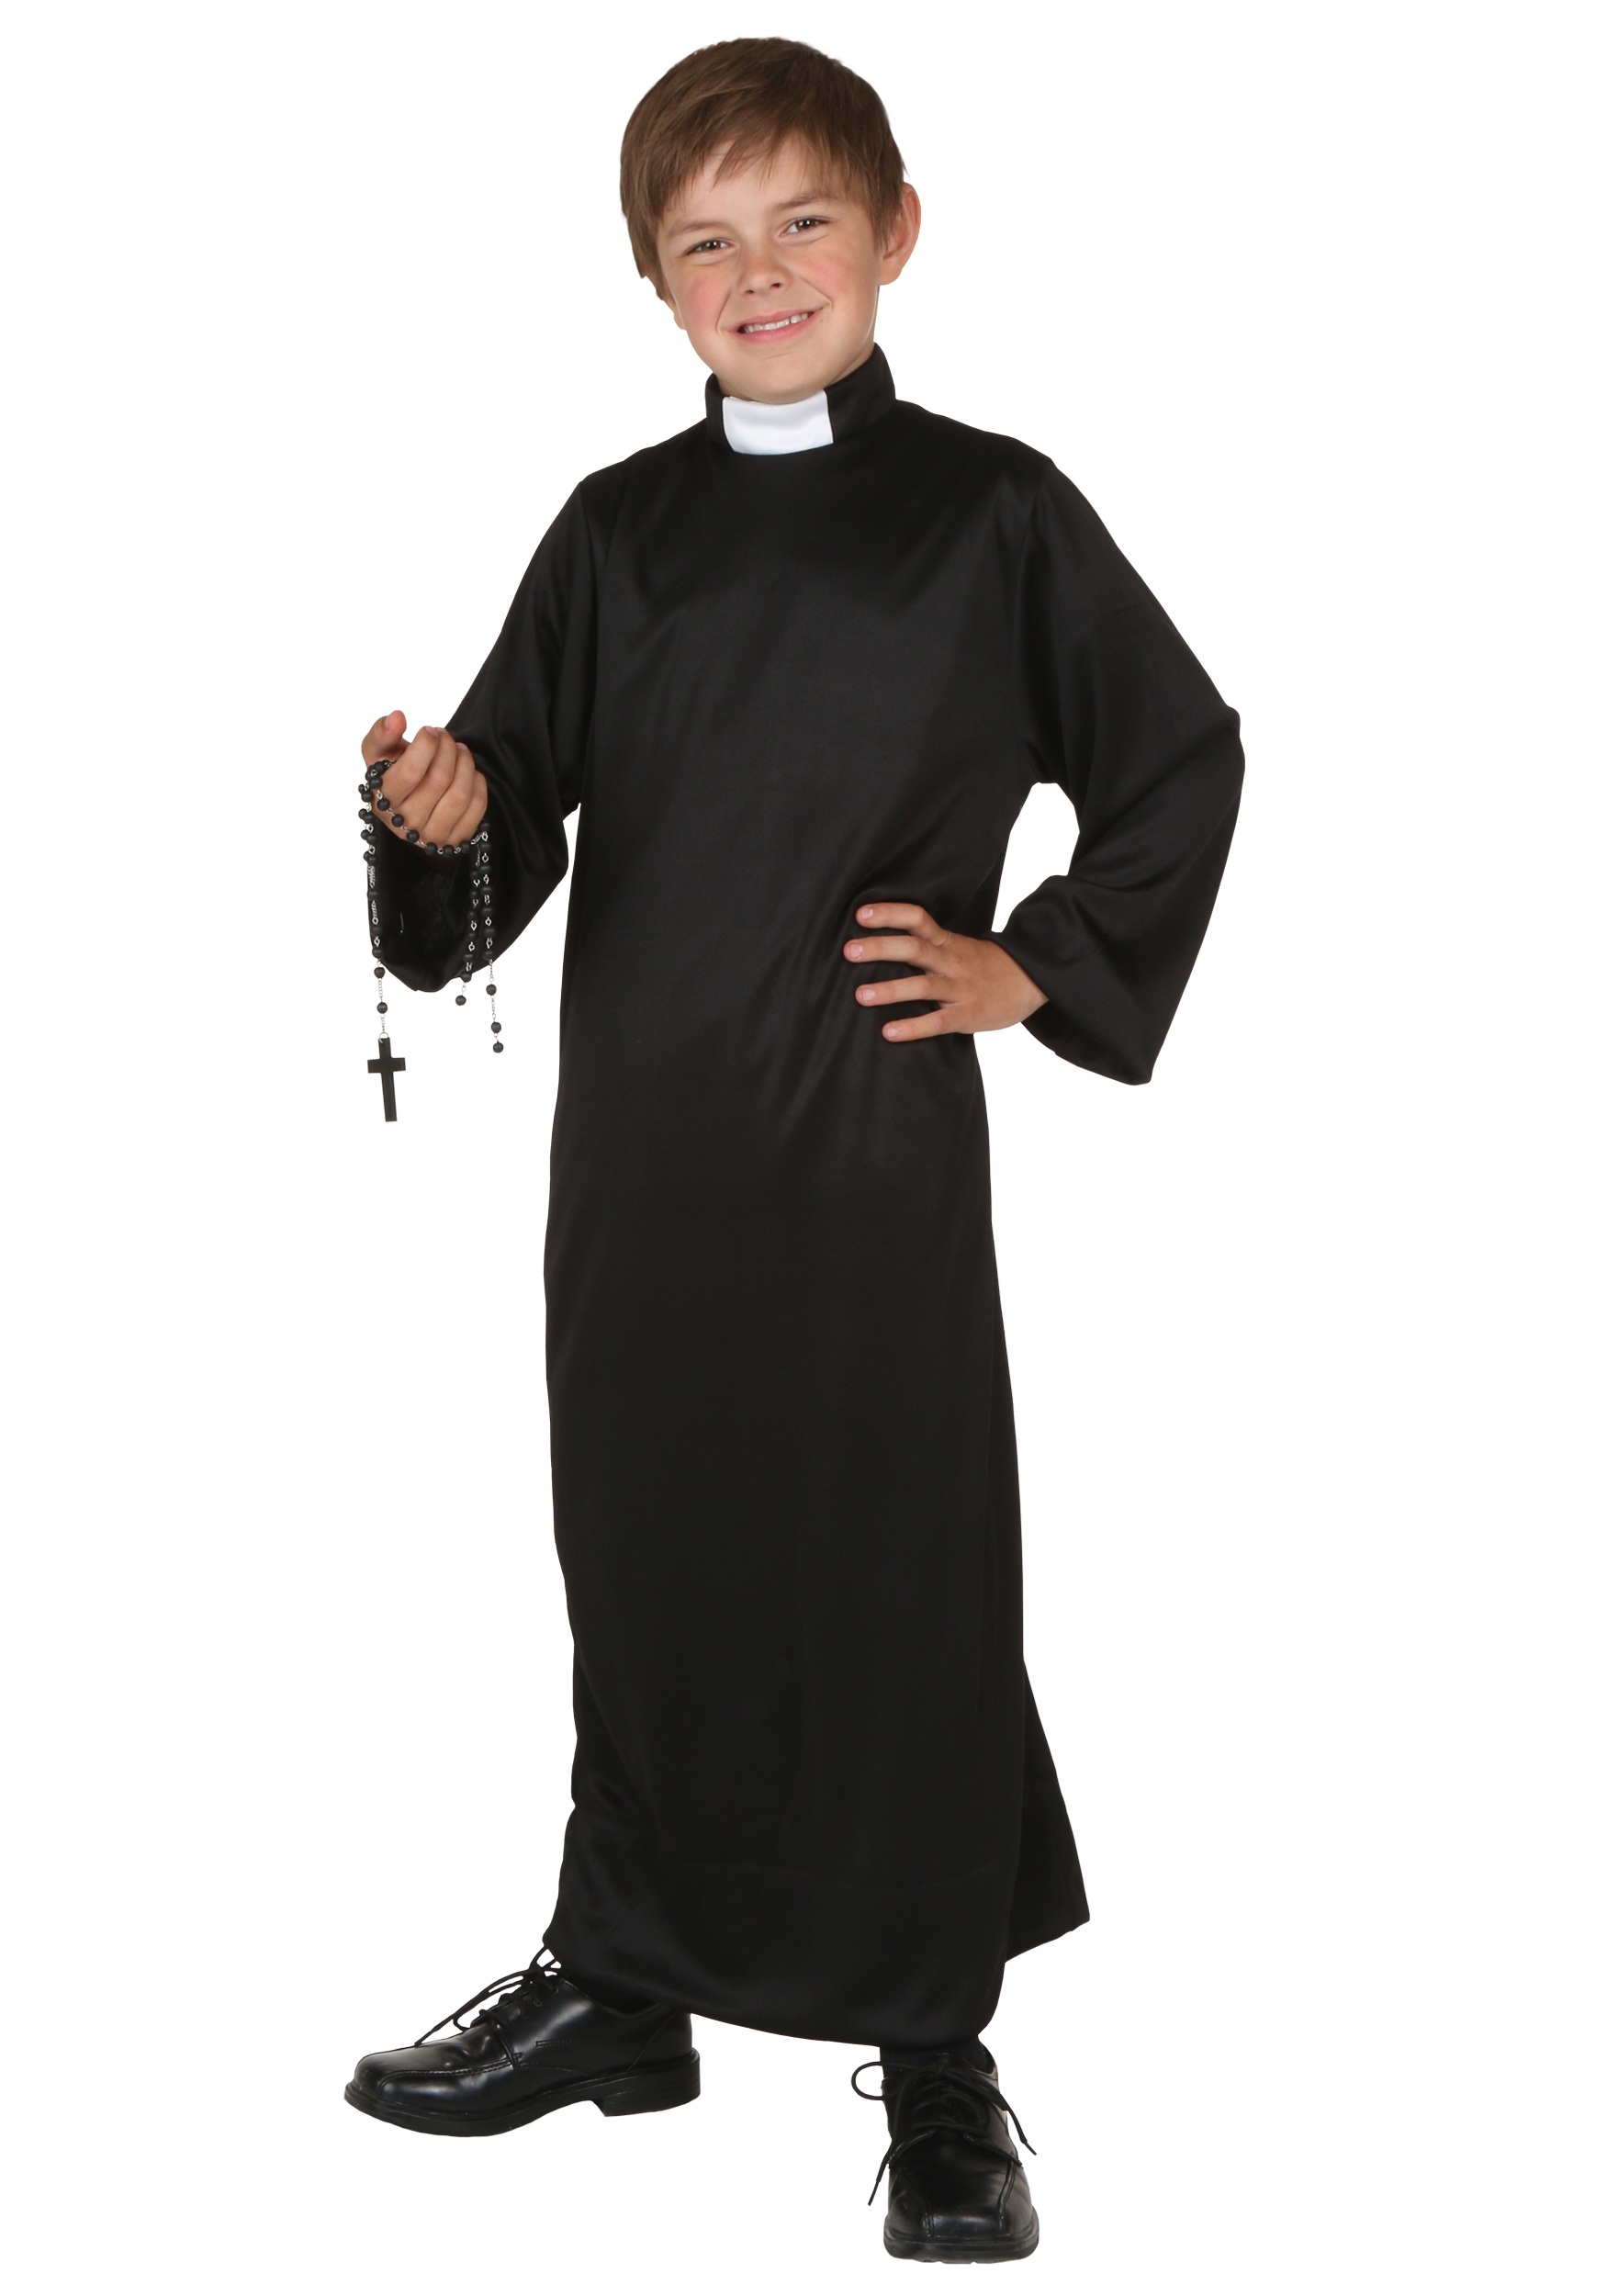 Priest Child Costume